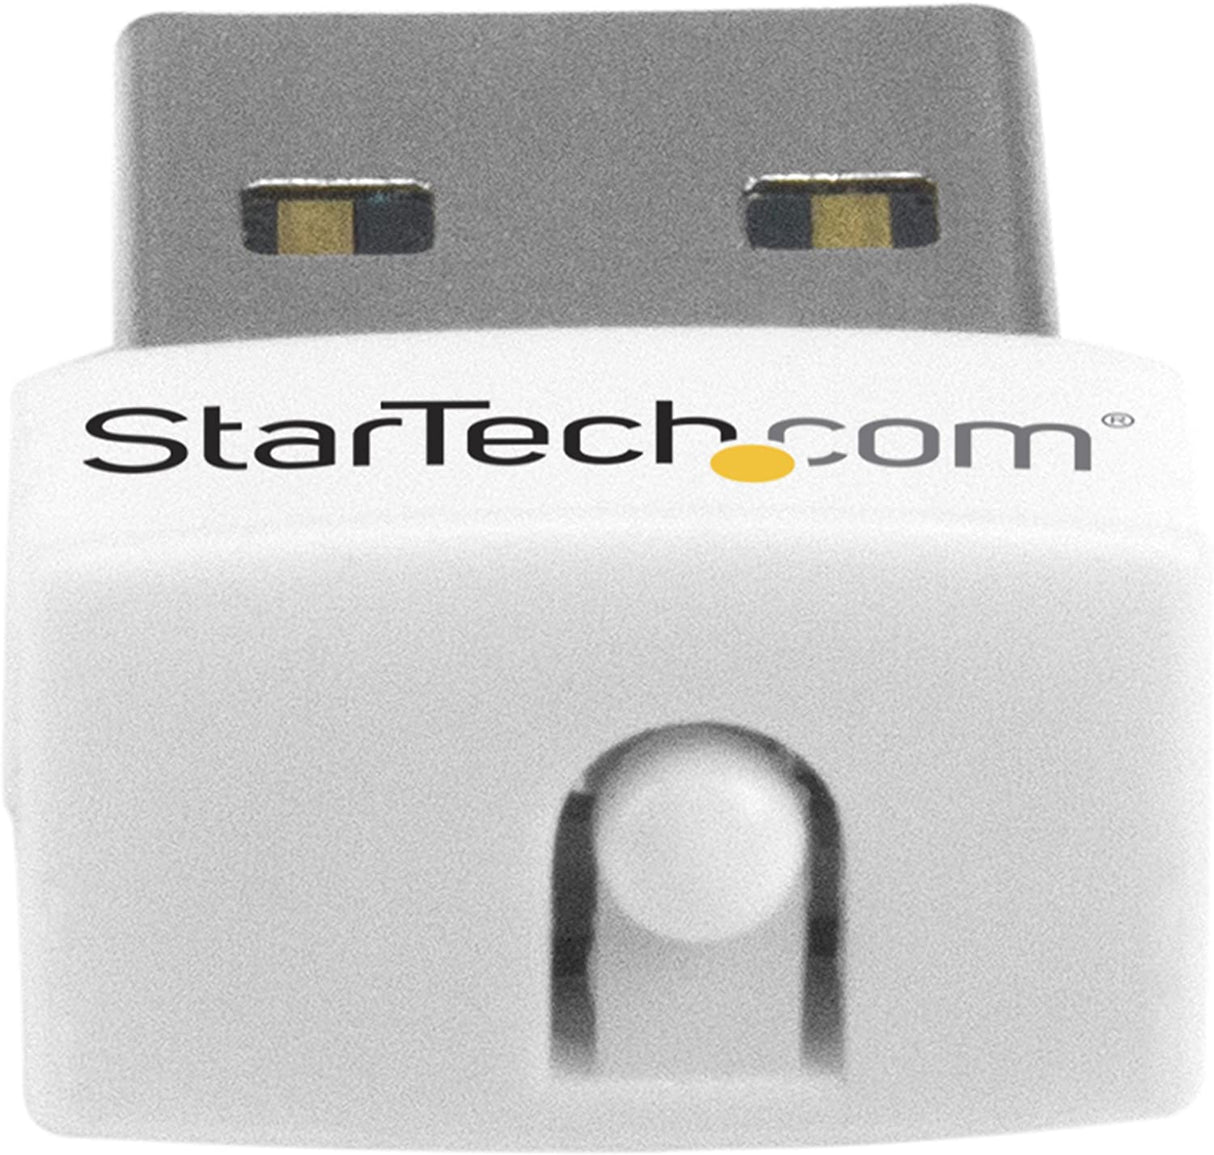 StarTech.com USB 150Mbps Mini Wireless N Network Adapter - 802.11n/g 1T1R USB WiFi Adapter - White USB Wireless Adapter - Wireless NIC (USB150WN1X1W)